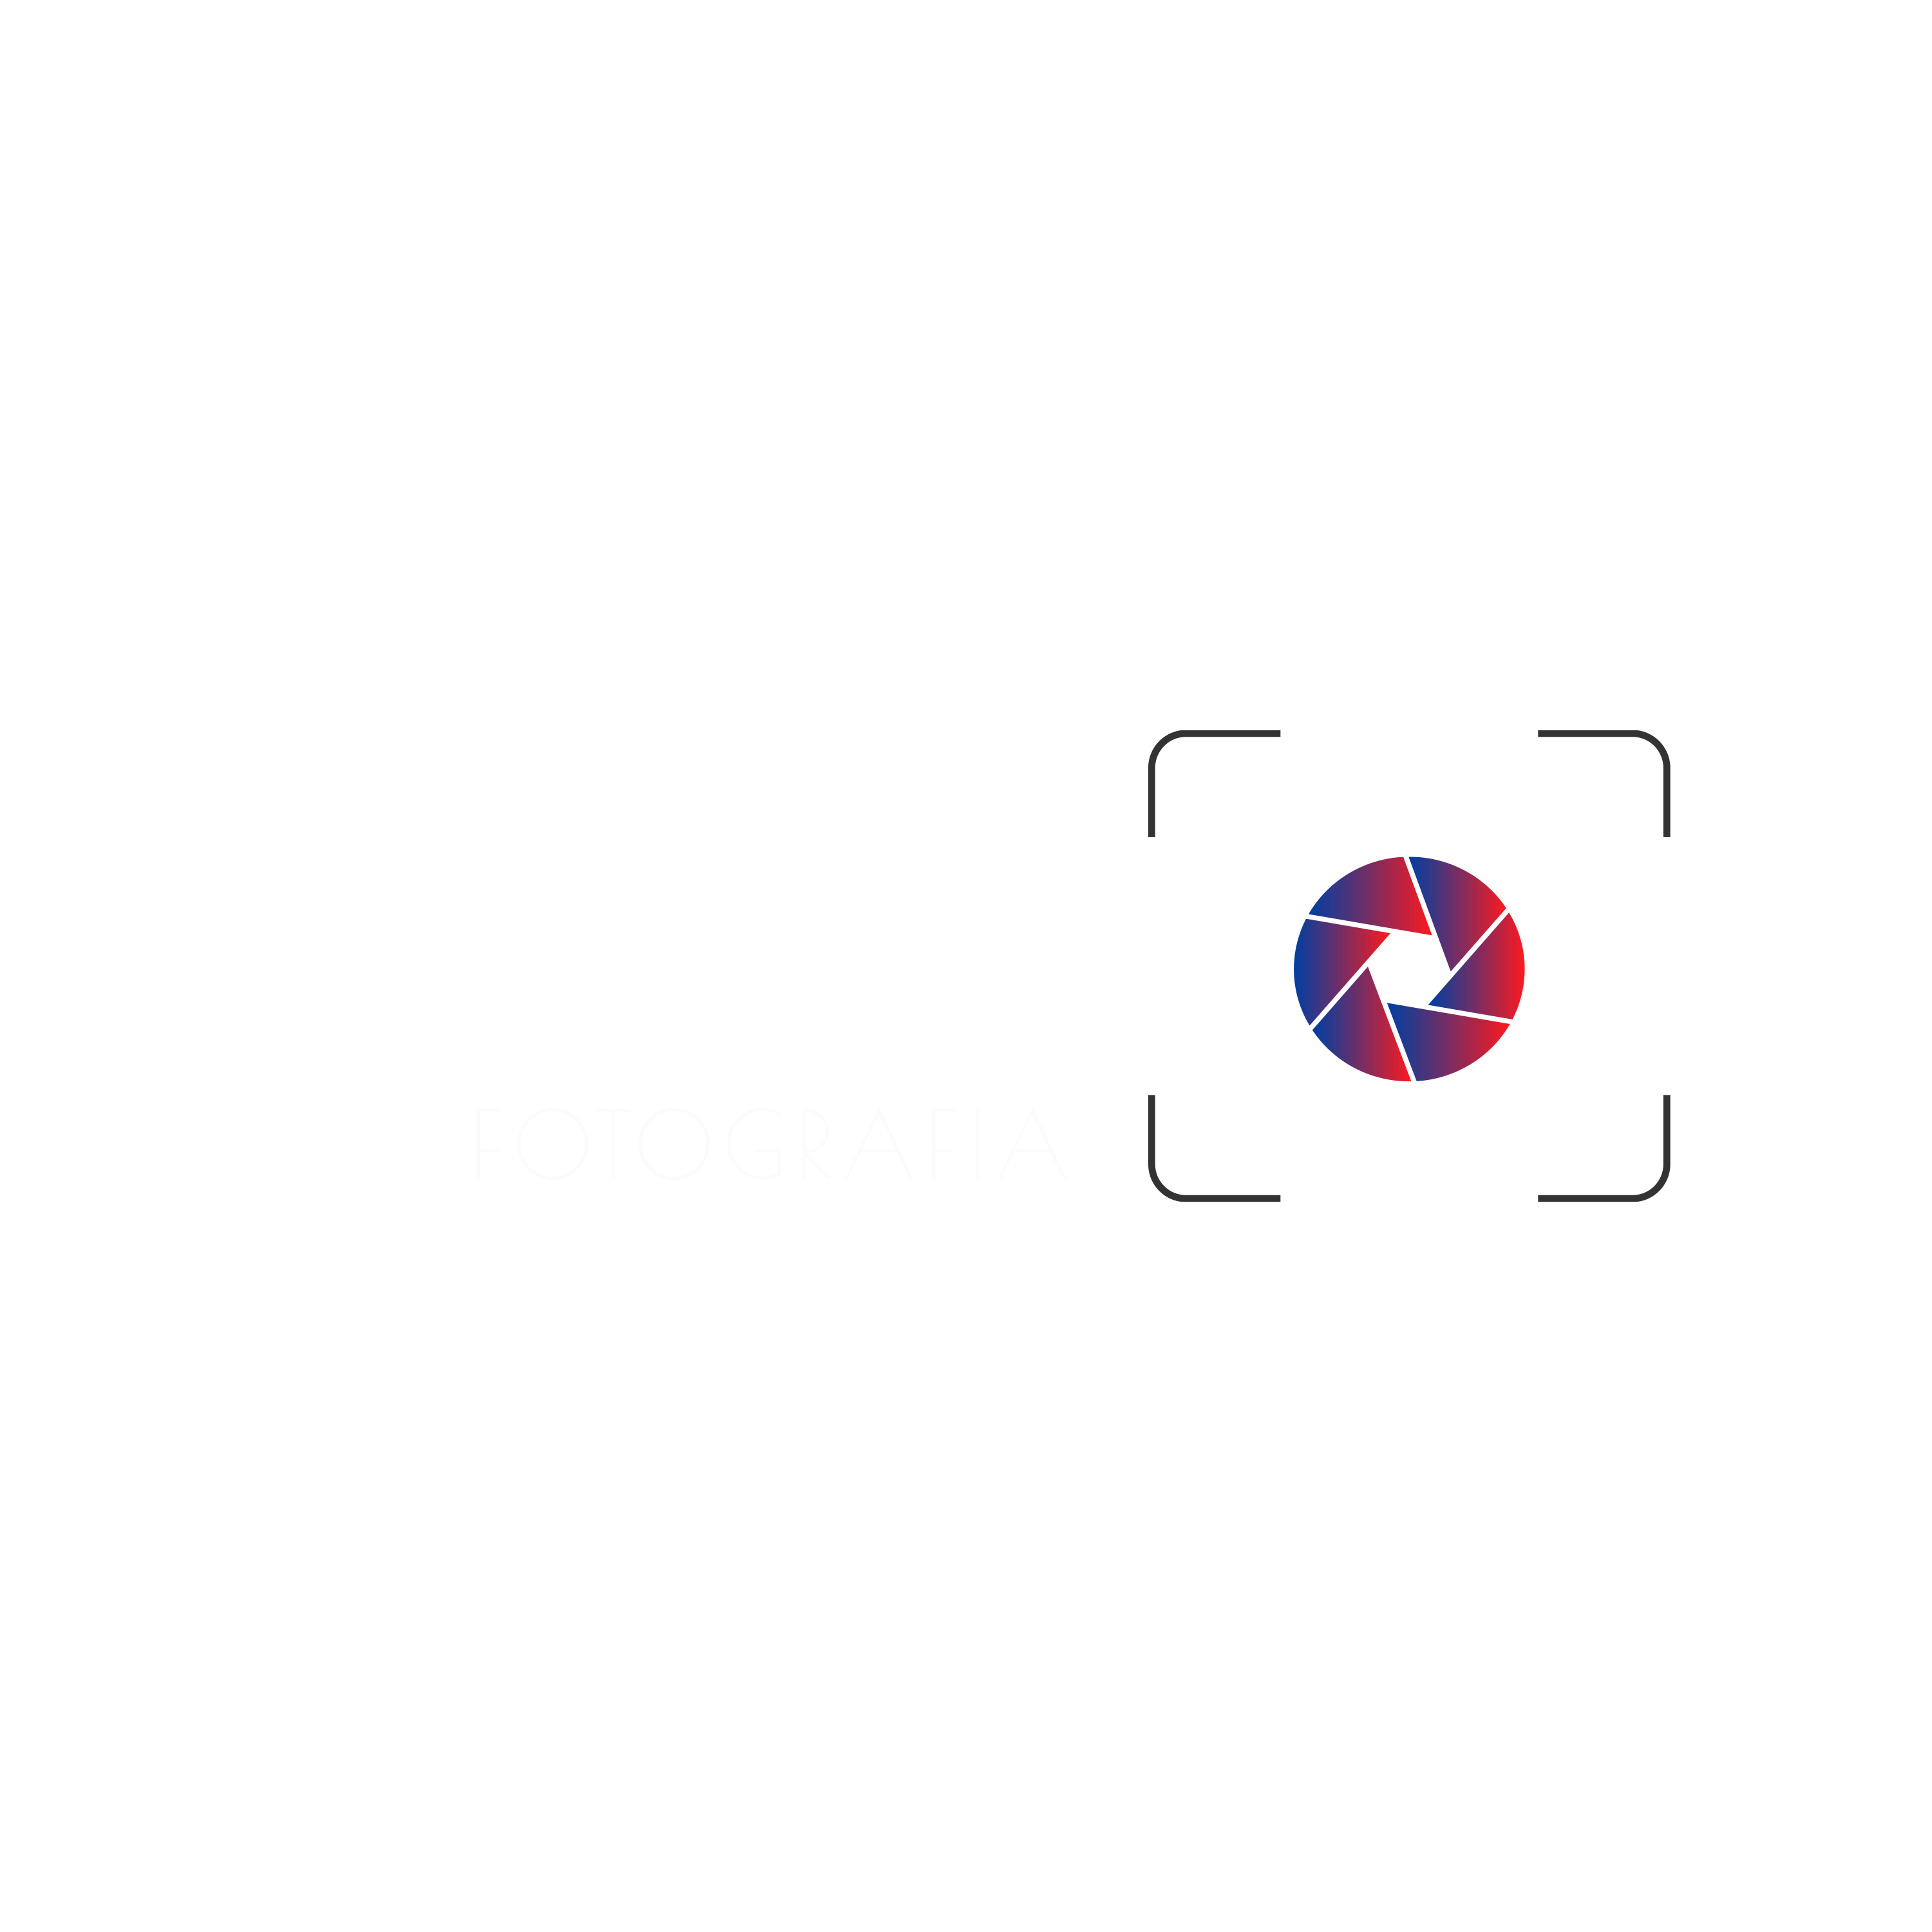 Fotoinstory Fotografia